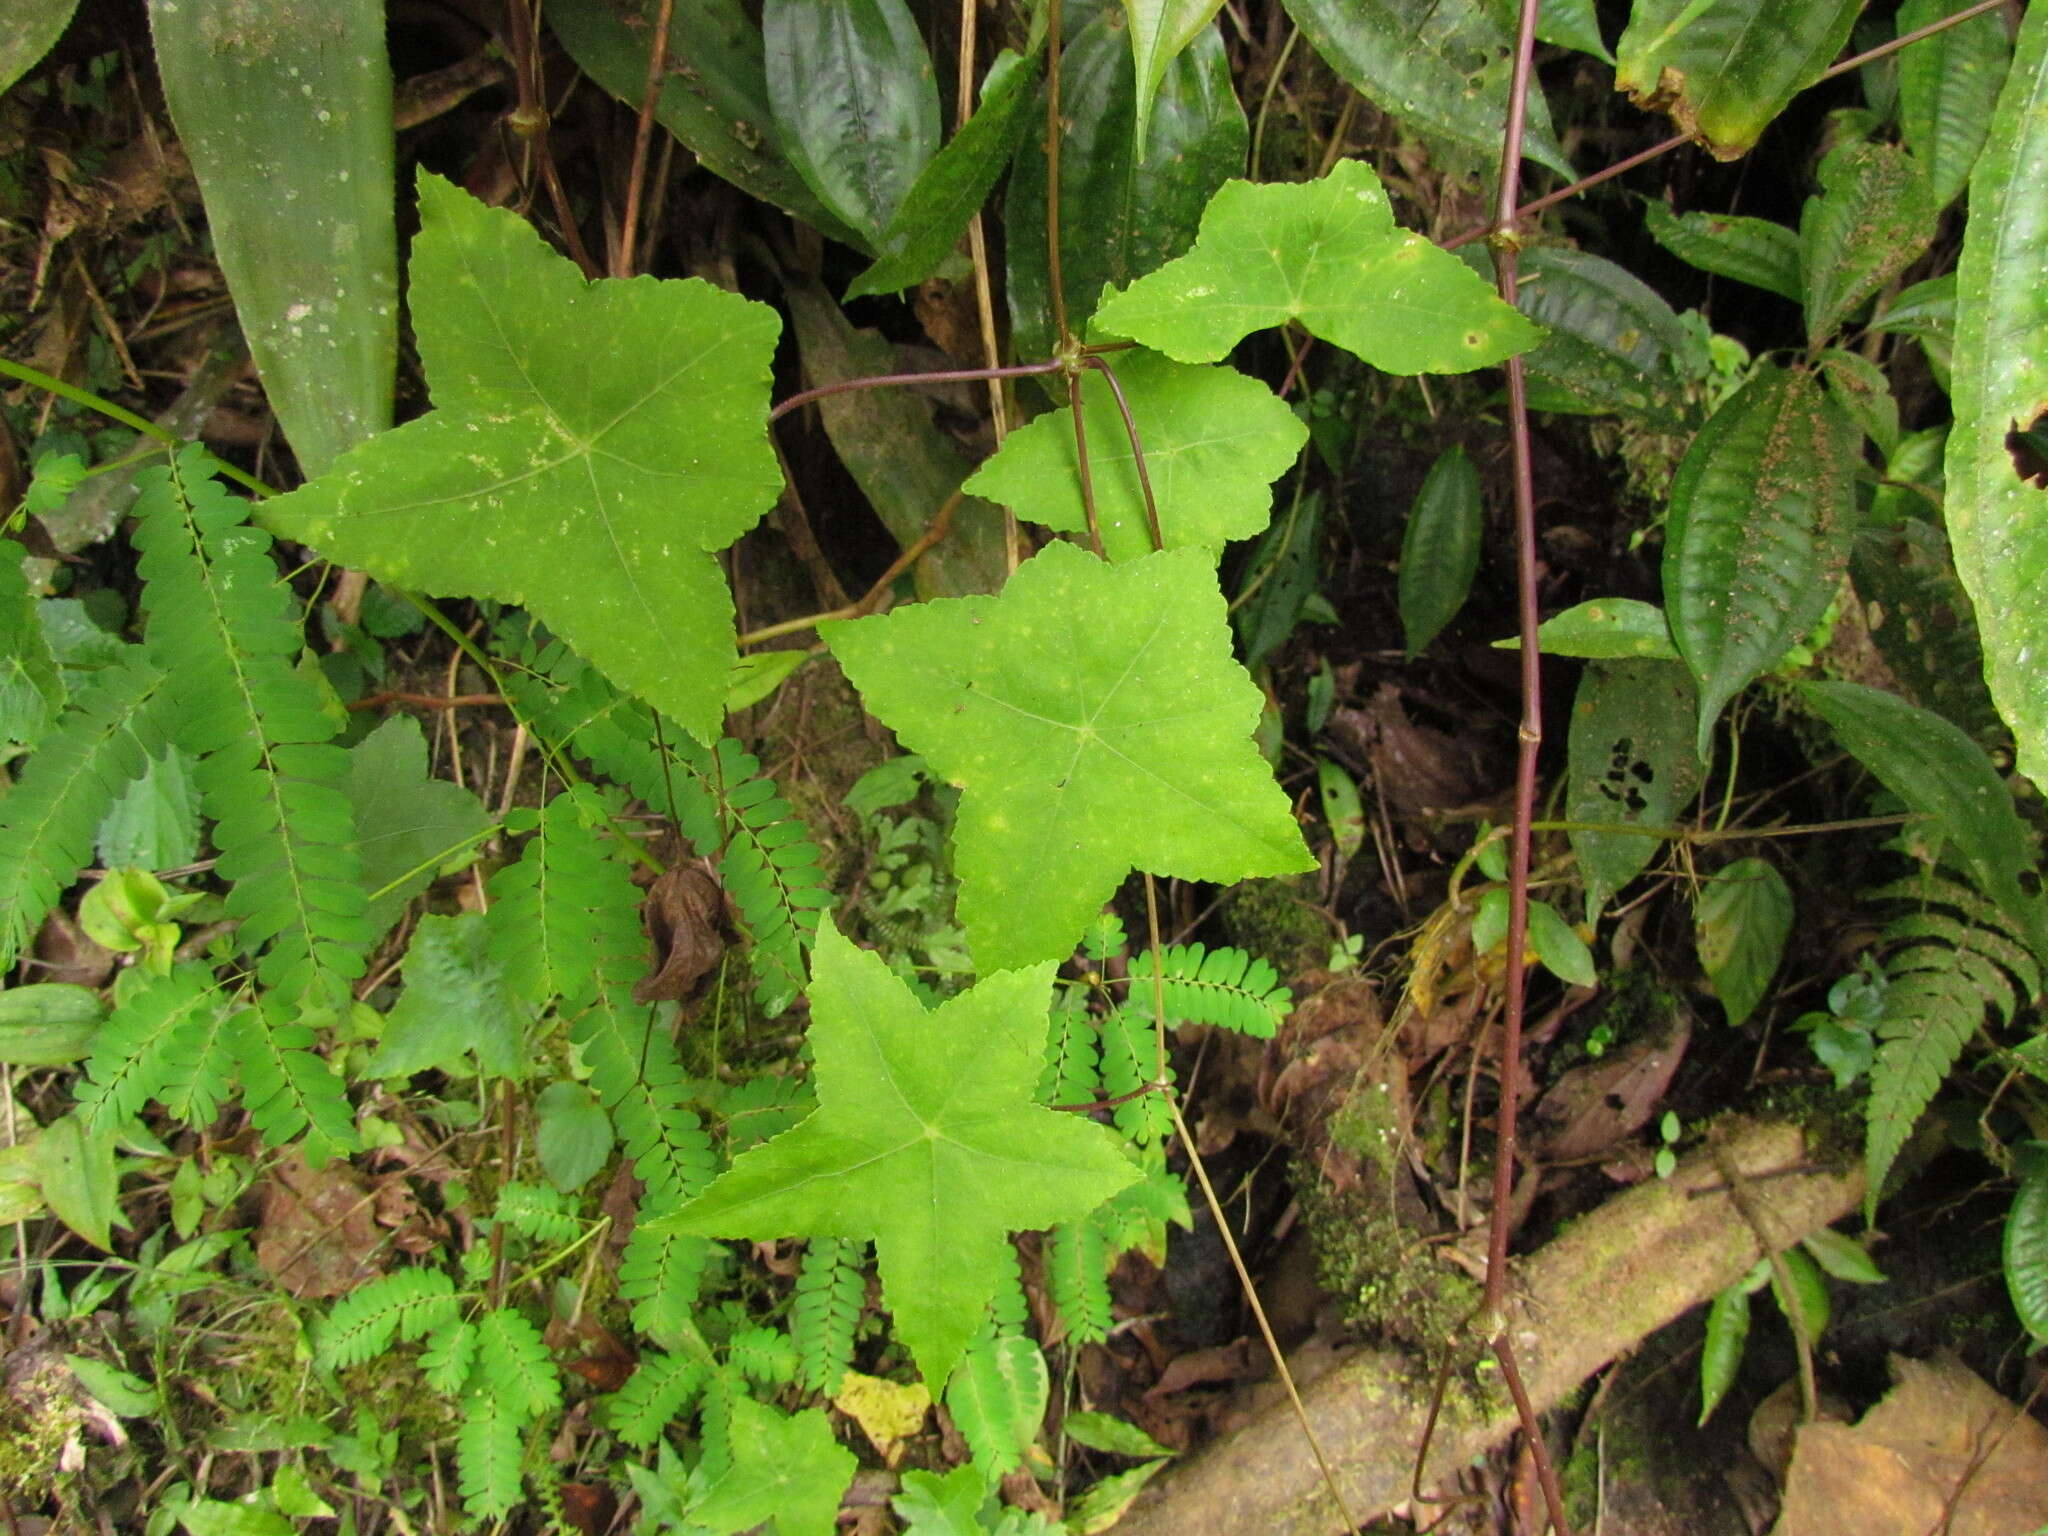 Image of Hydrocotyle quinqueloba Ruiz & Pav.